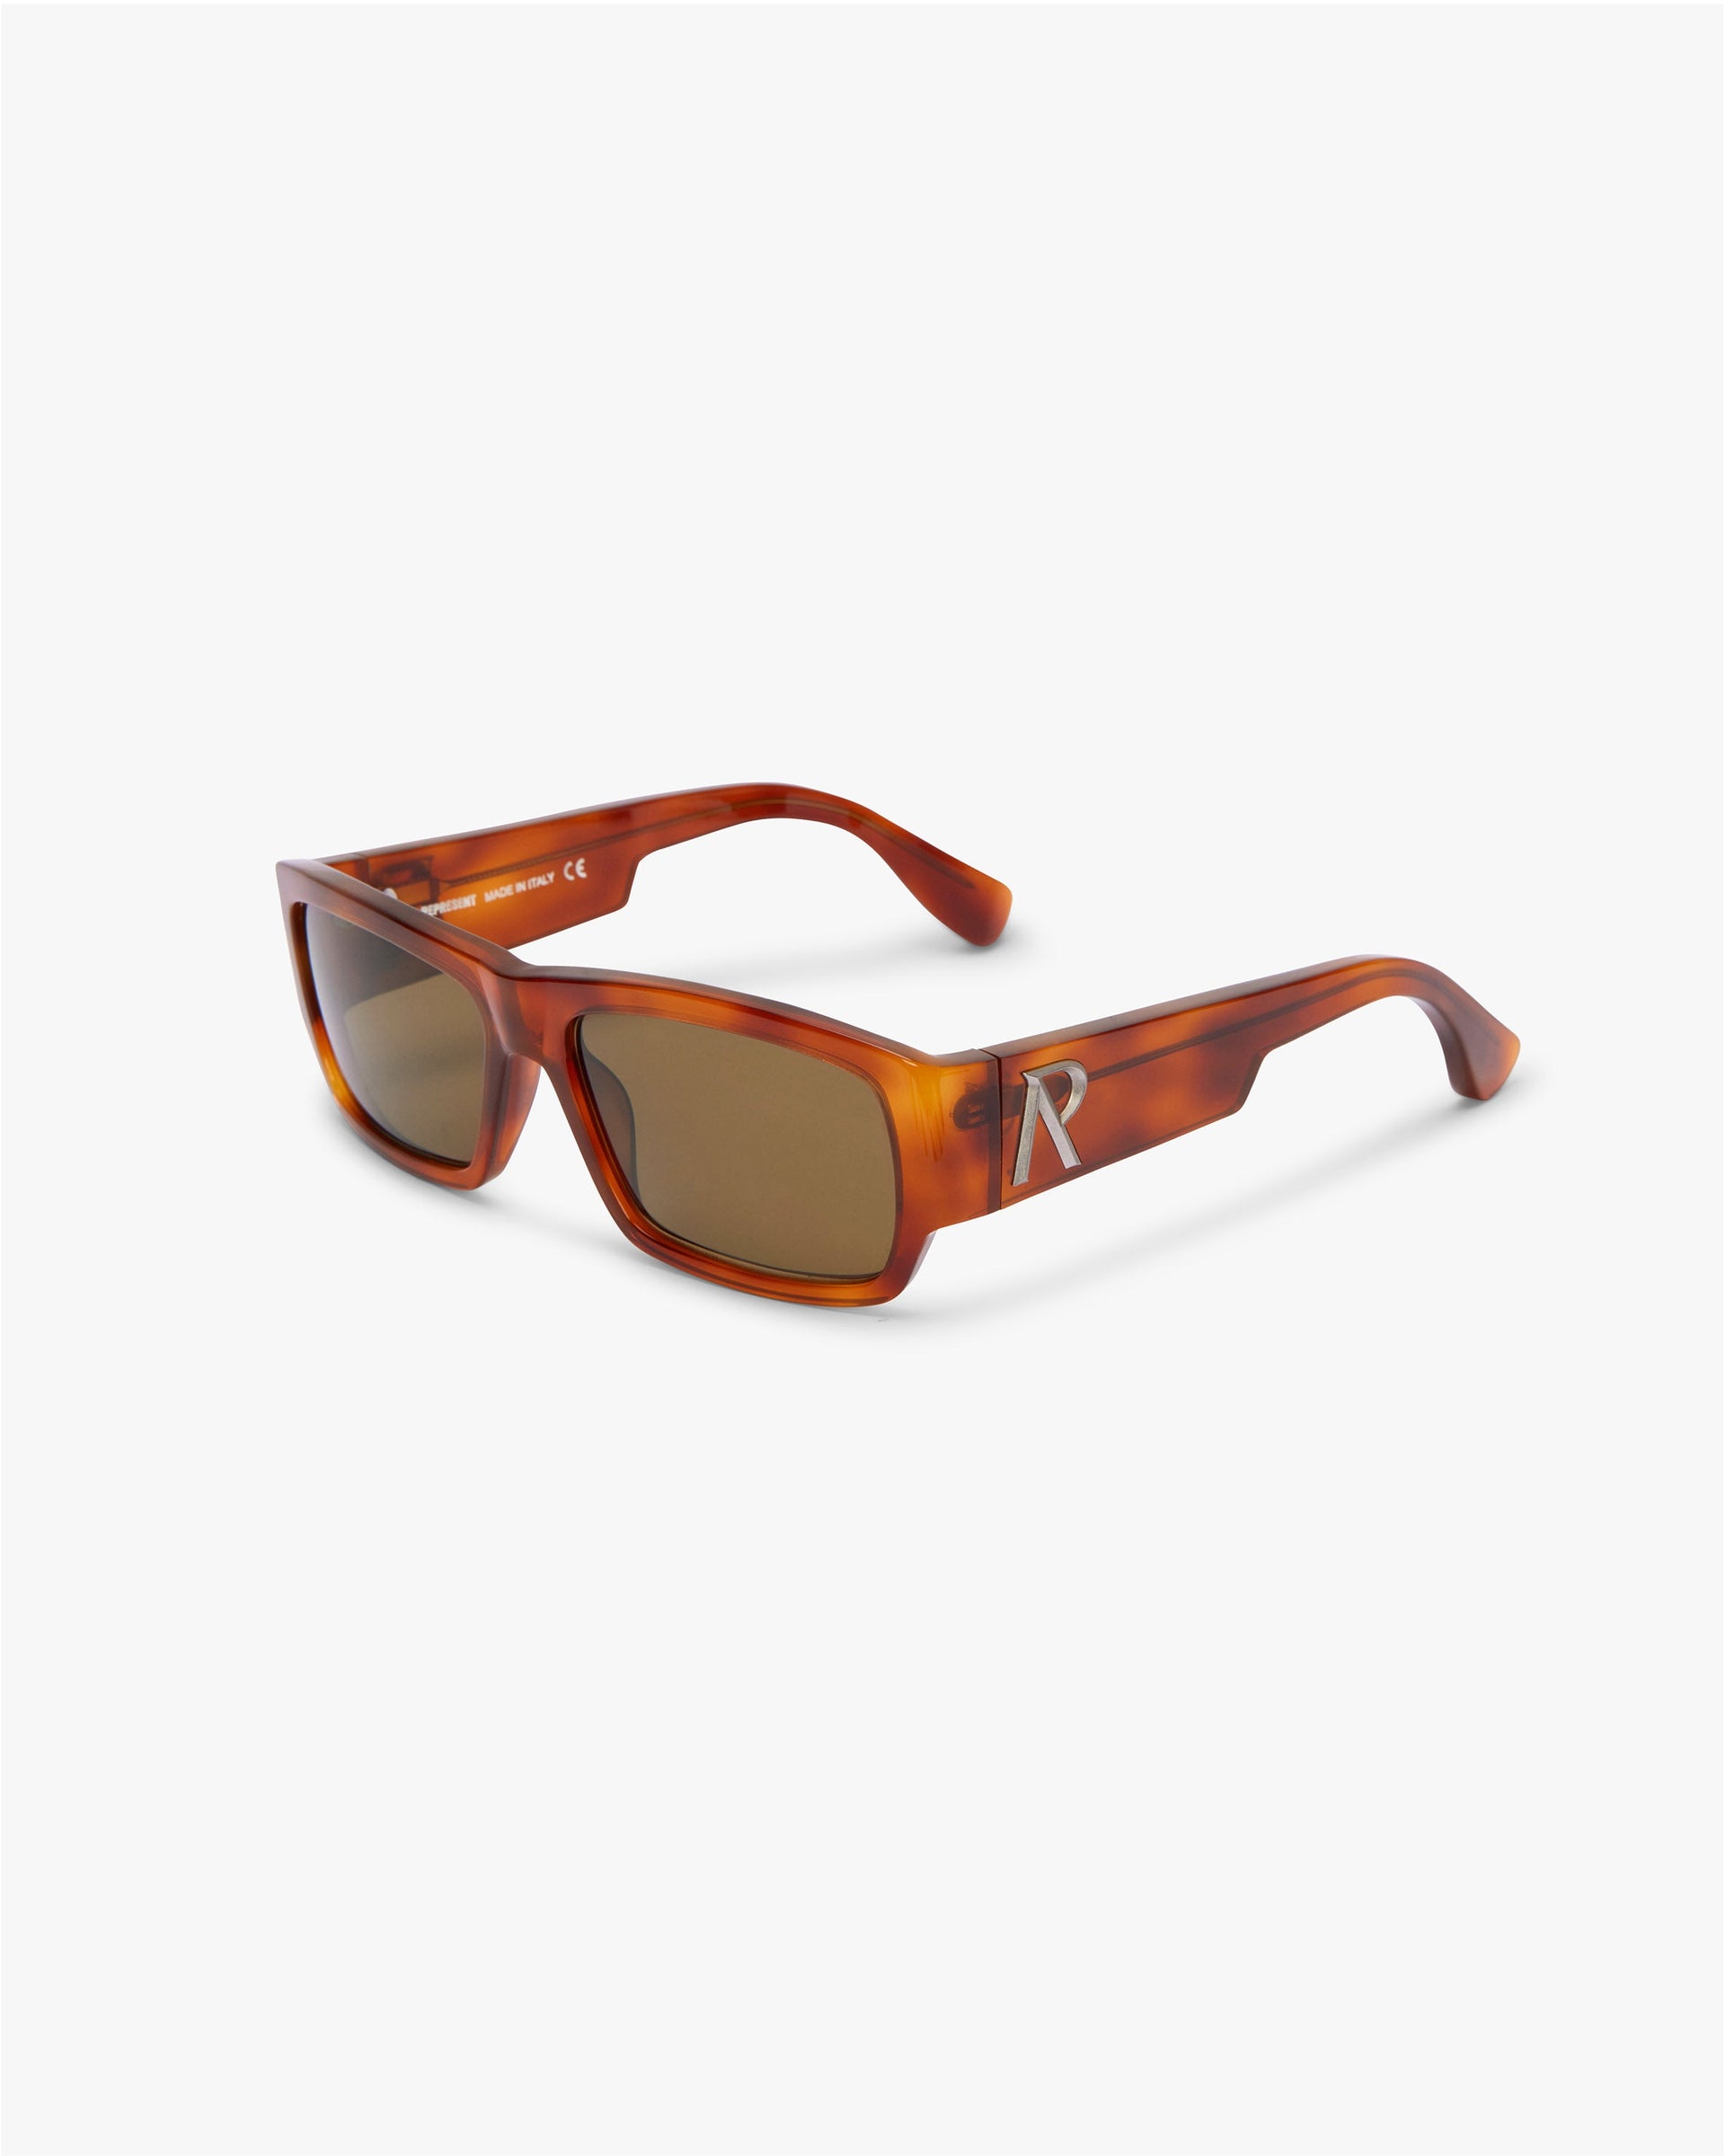 Initial Sunglasses | Tortoise Shell Accessories SC22 | Represent Clo